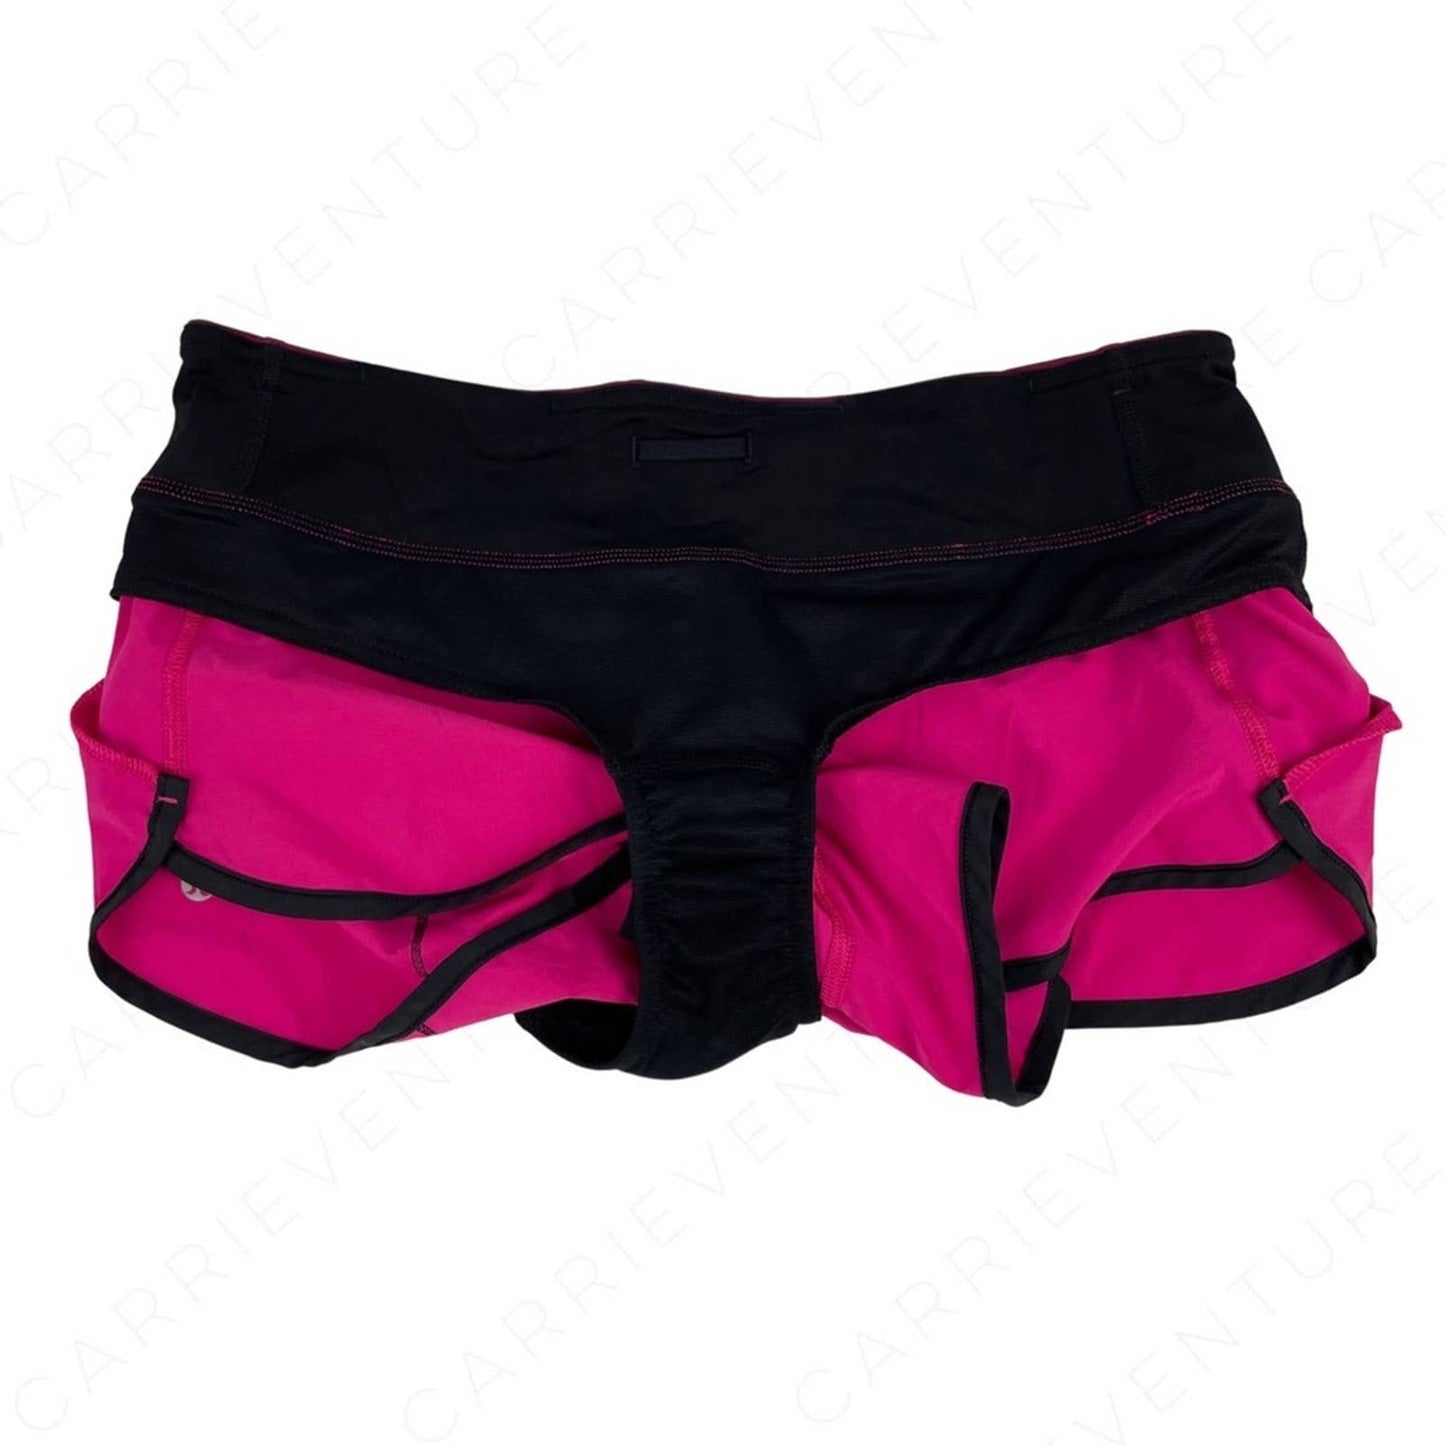 Lululemon Speed Short Jewelled Magenta Bright Pink Running Athletic Activewear Size 6